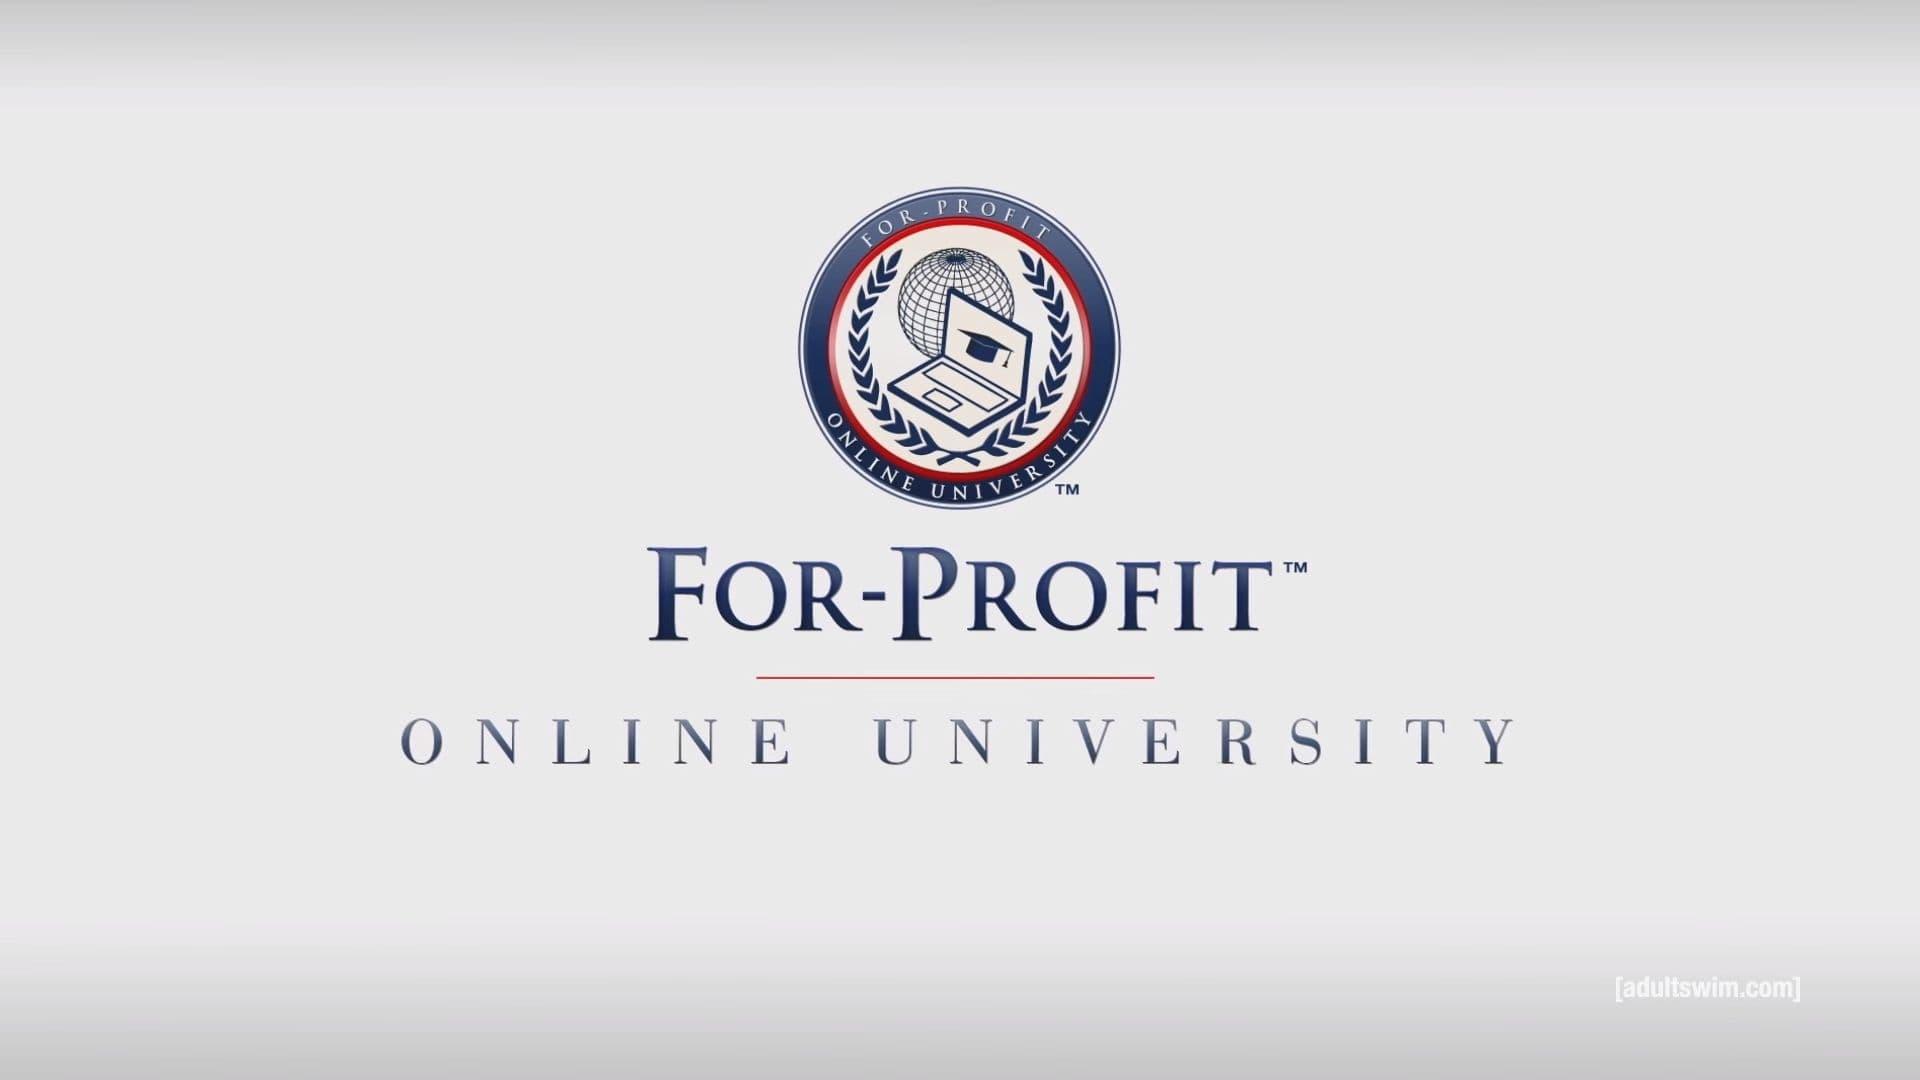 For-Profit Online University backdrop